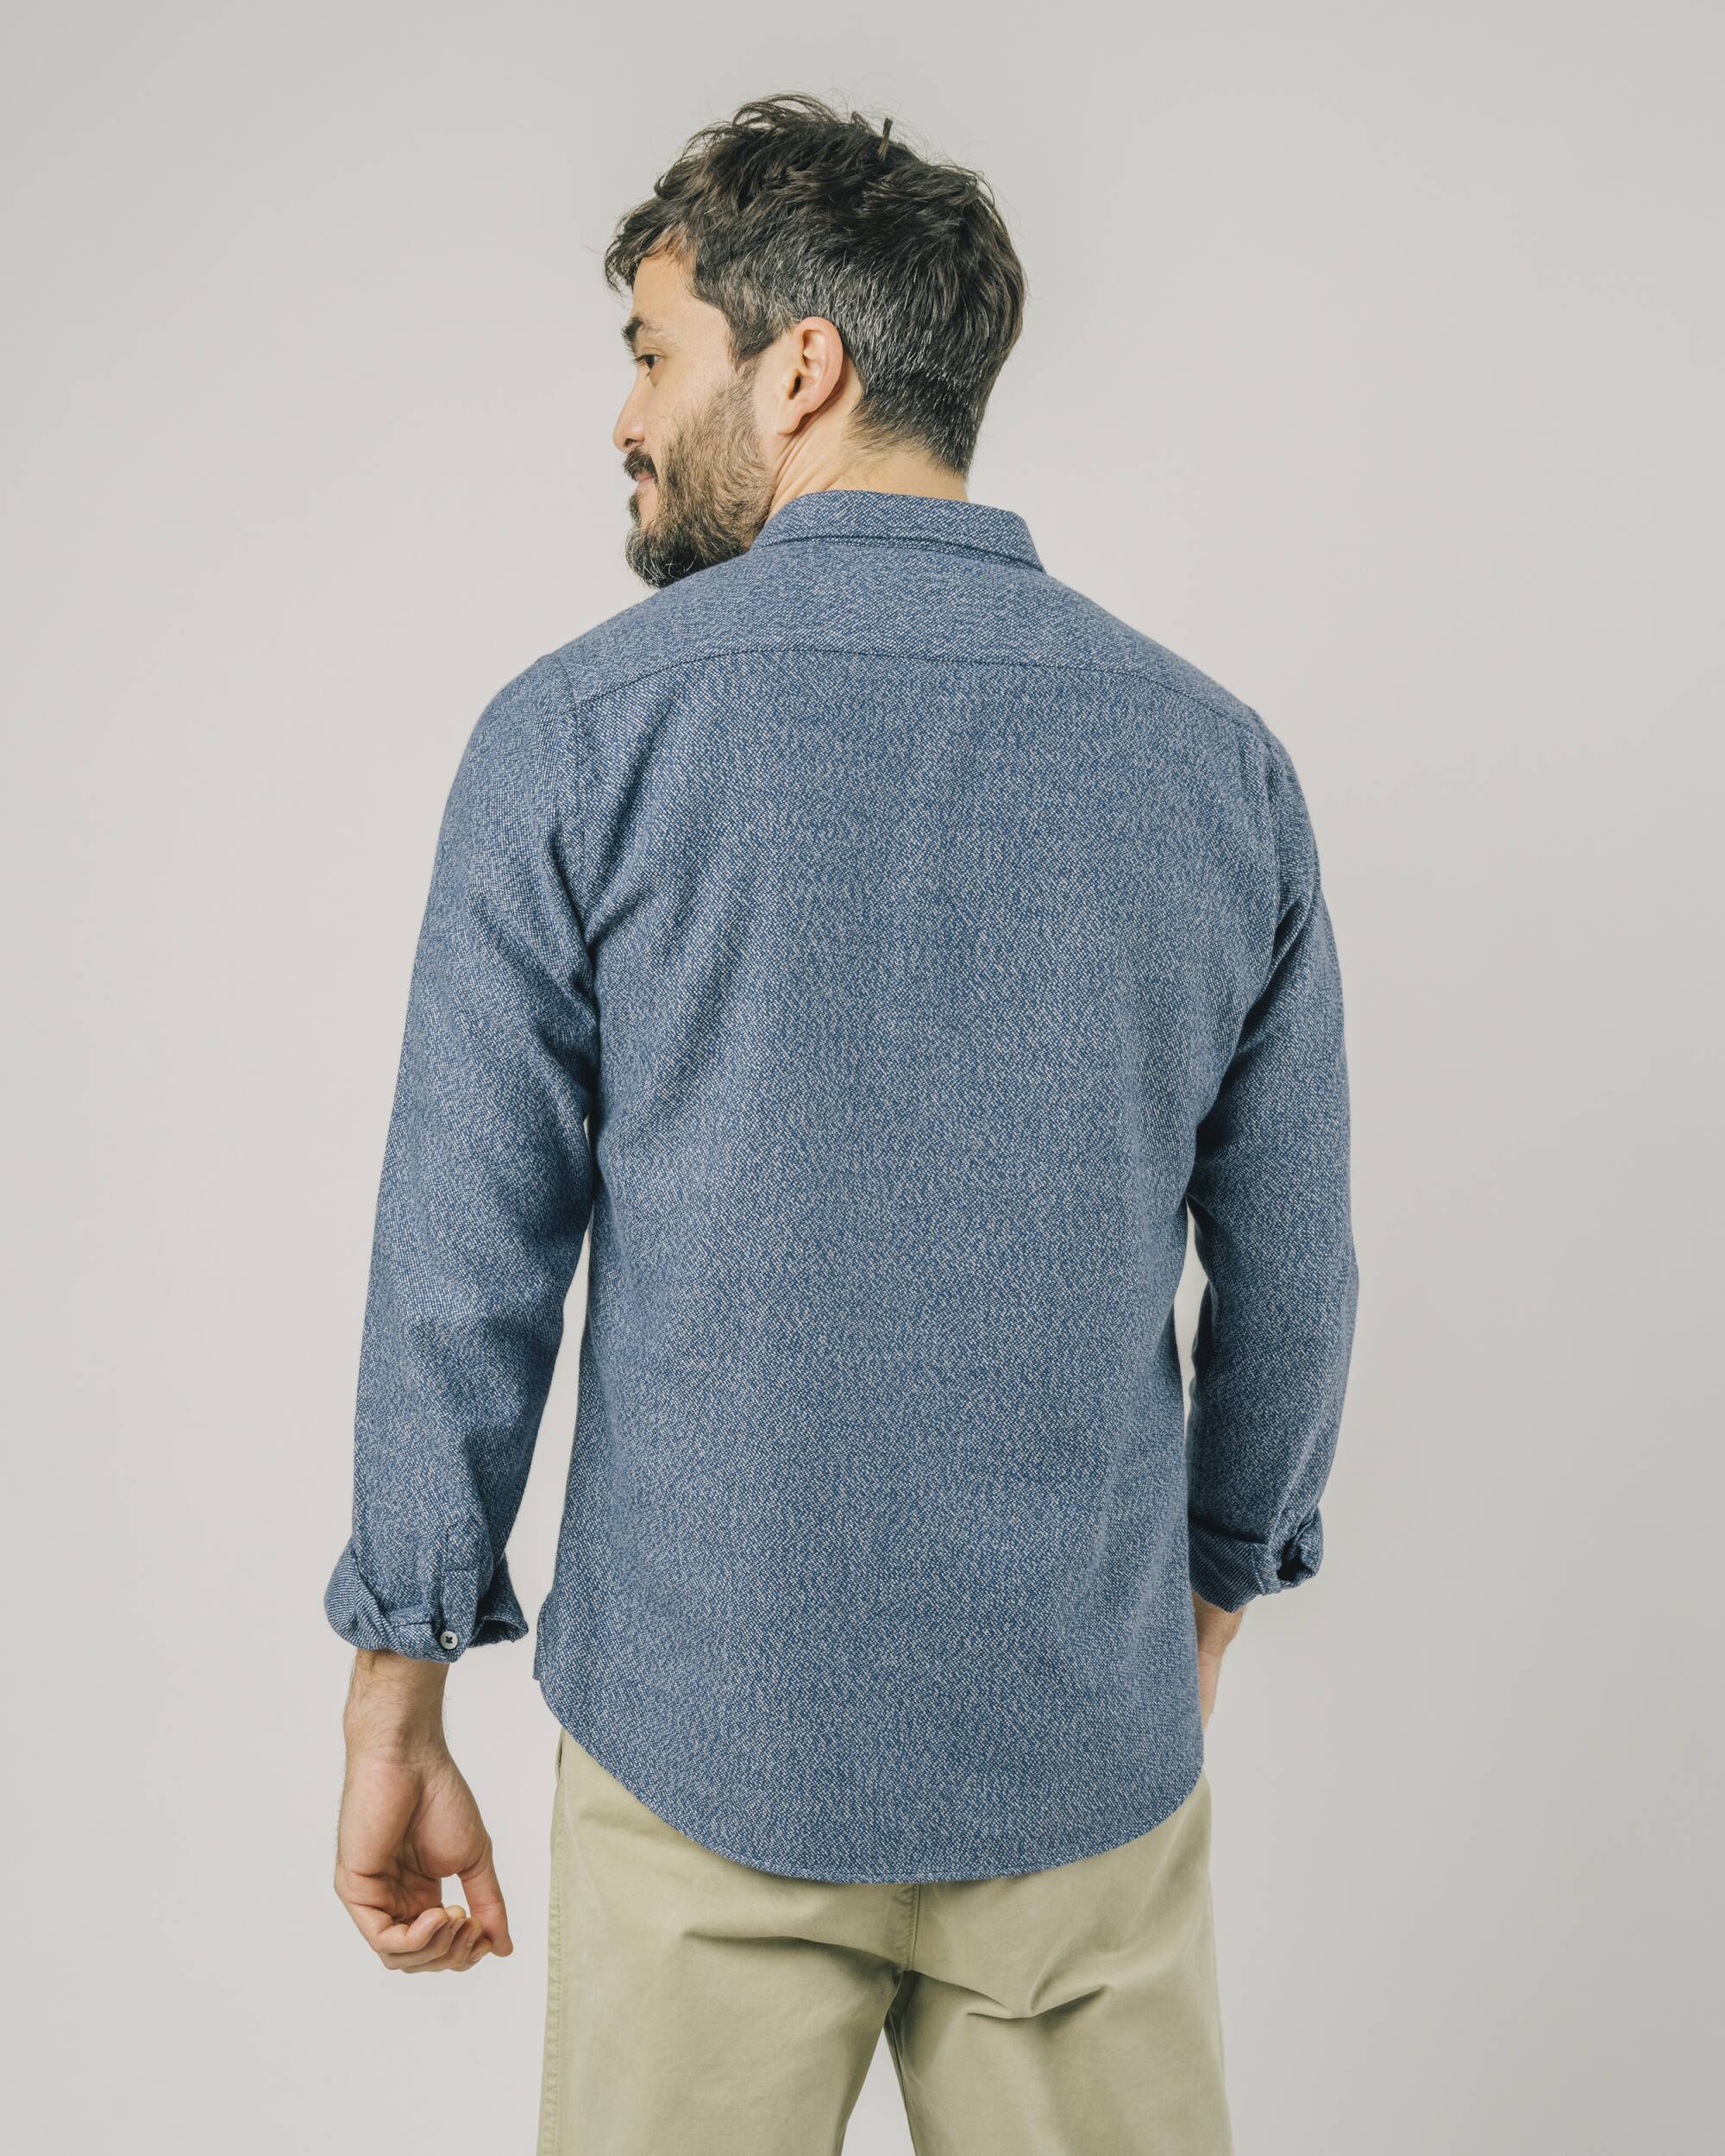 Blue, long-sleeved Nuuk shirt made from 100% organic cotton from Brava Fabrics